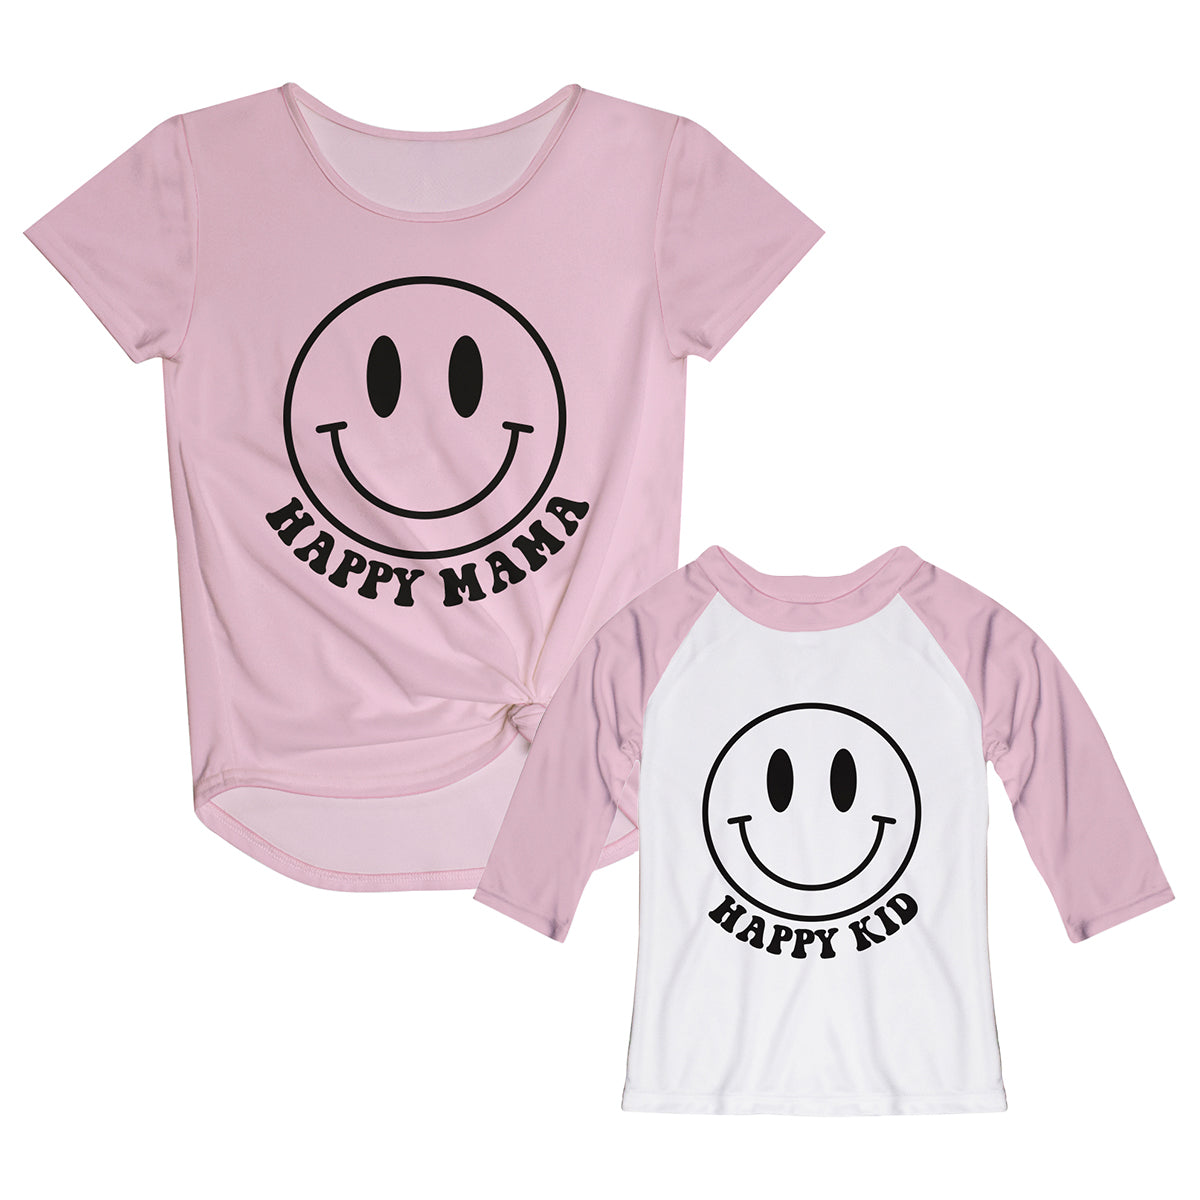 Happy Kind White and Pink Raglan Tee Shirt 3/4 Sleeve - Wimziy&Co.